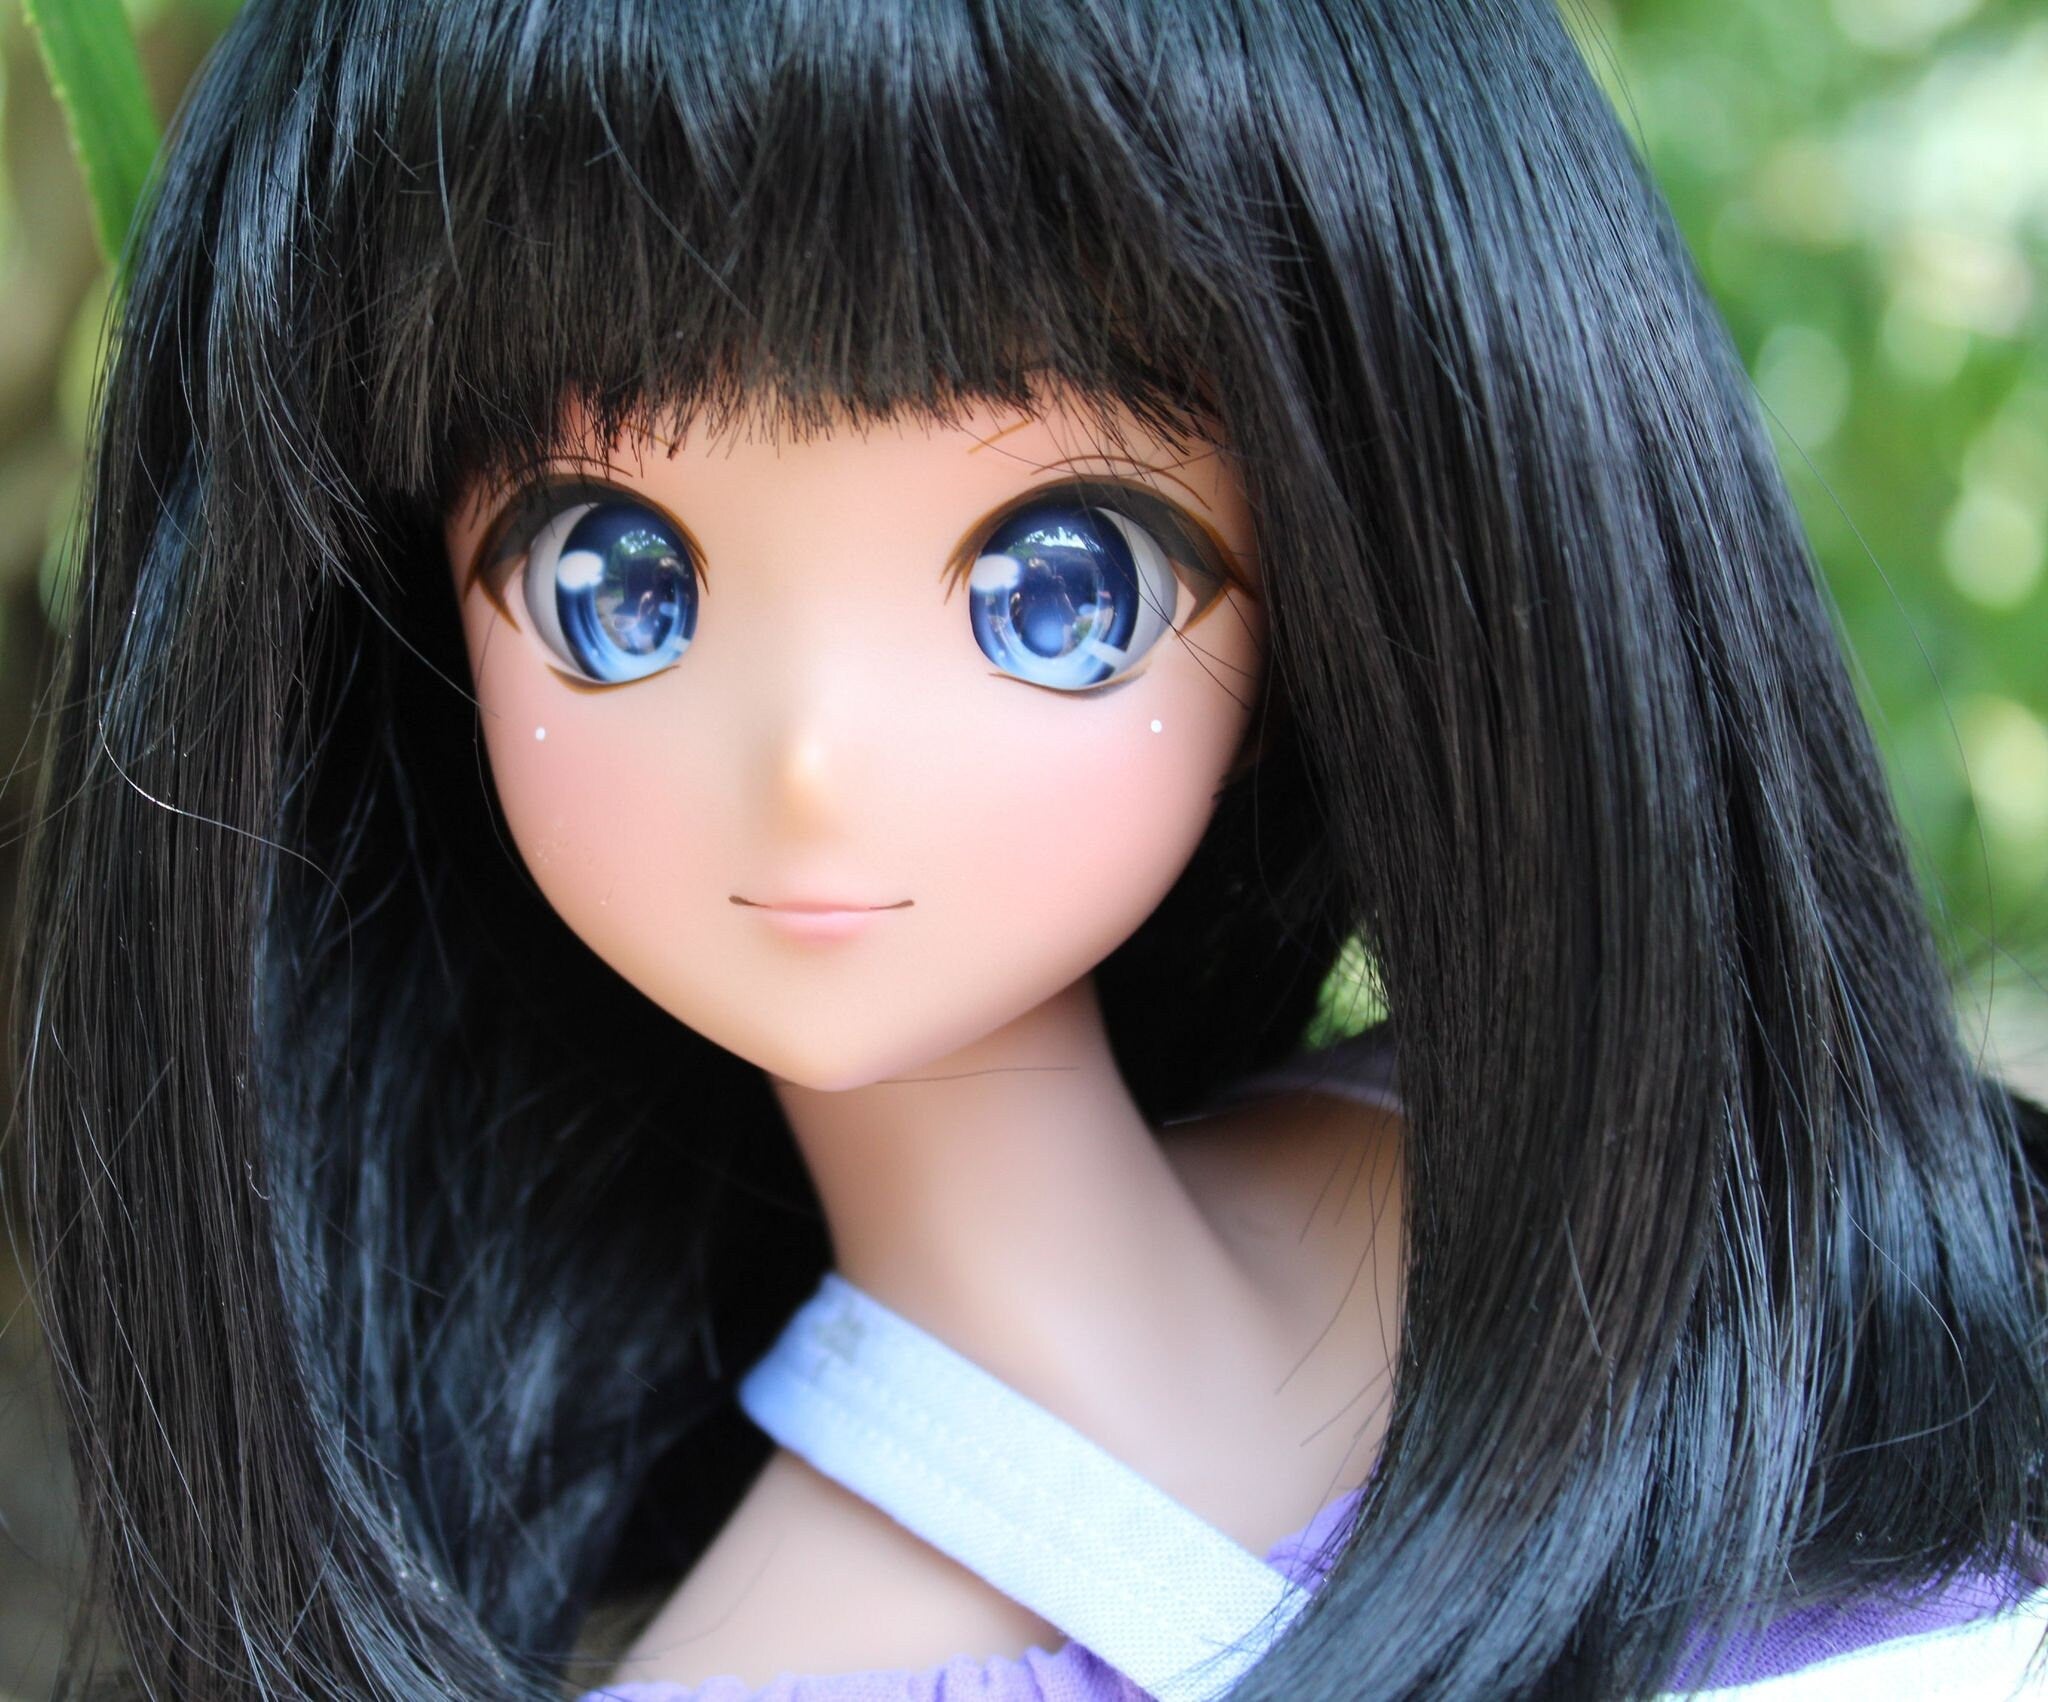 Custom doll Wig for Smart Dolls- Heat Safe - Tangle Resistant- 8.5" head size of Bjd, SD, Dollfie Dream dolls black bangs